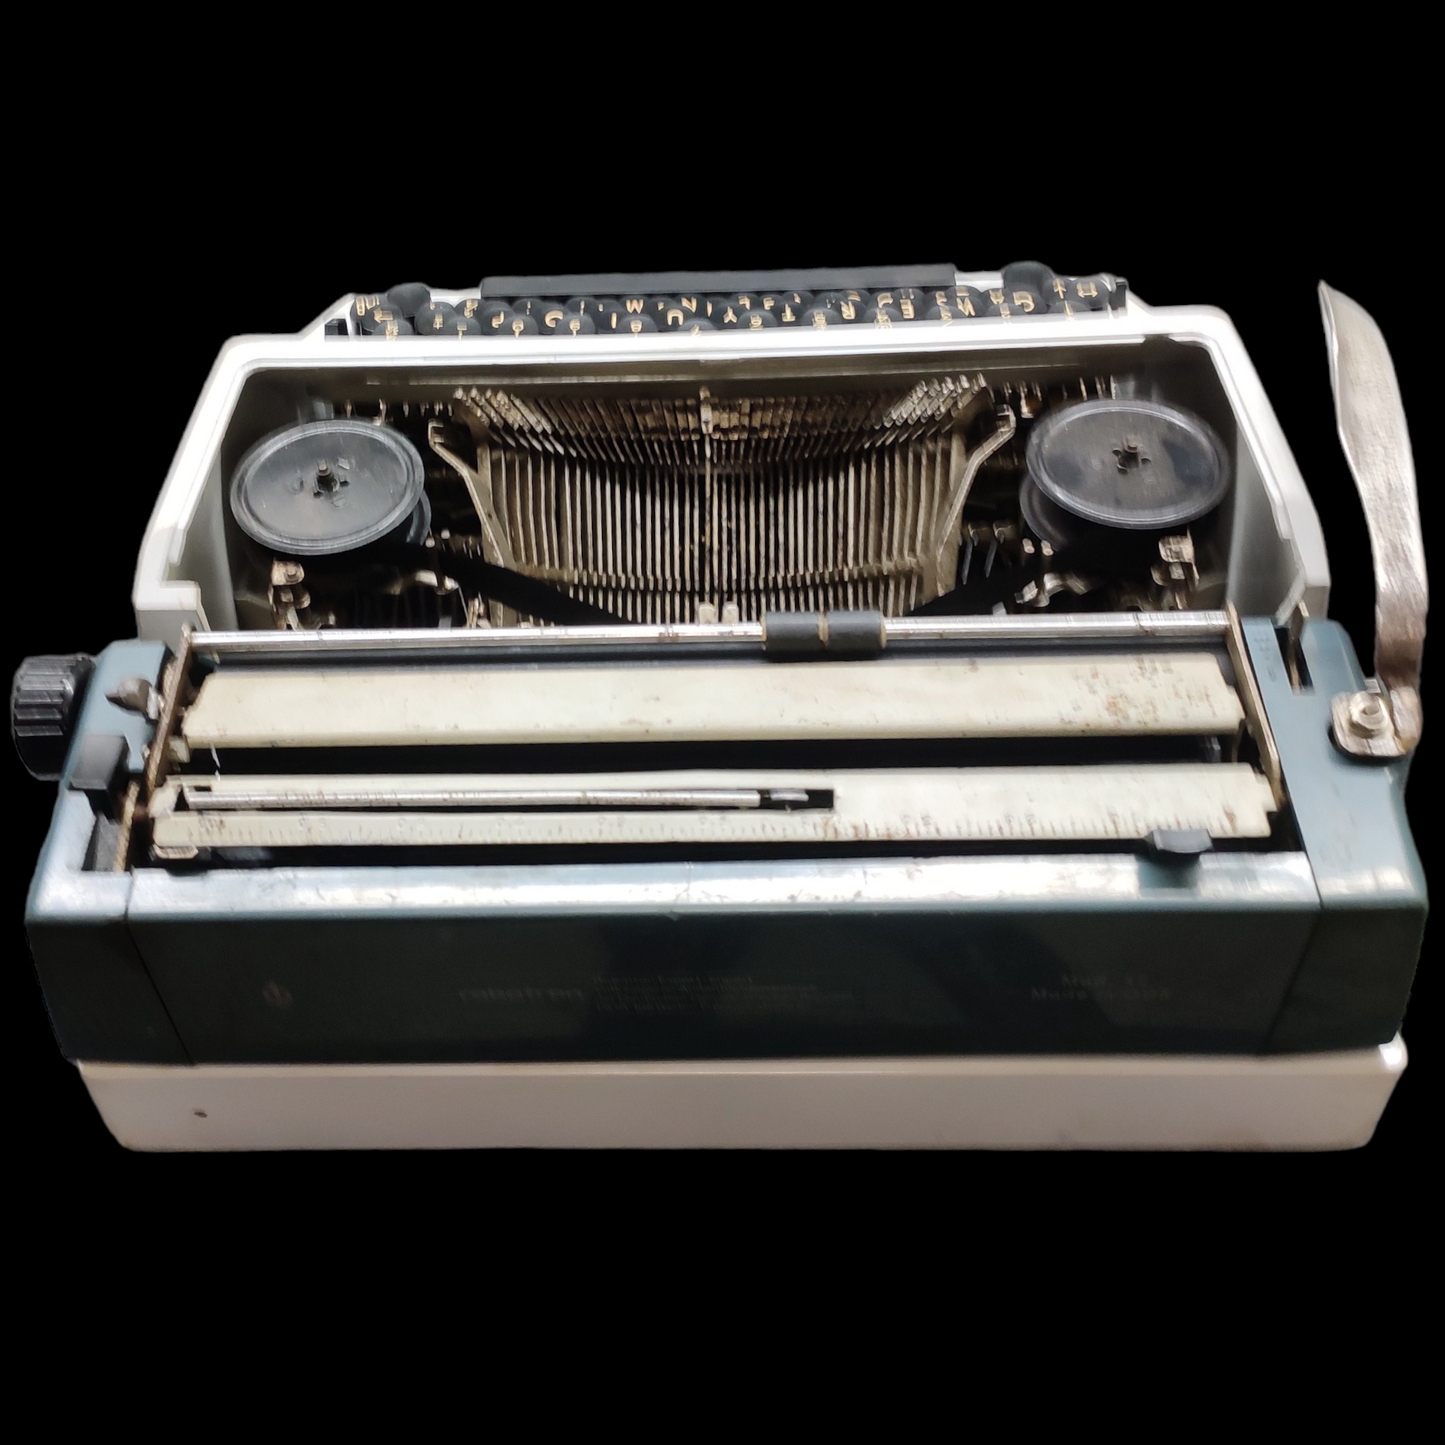 Image of Erika Typewriter. Available from universaltypewritercompany.in